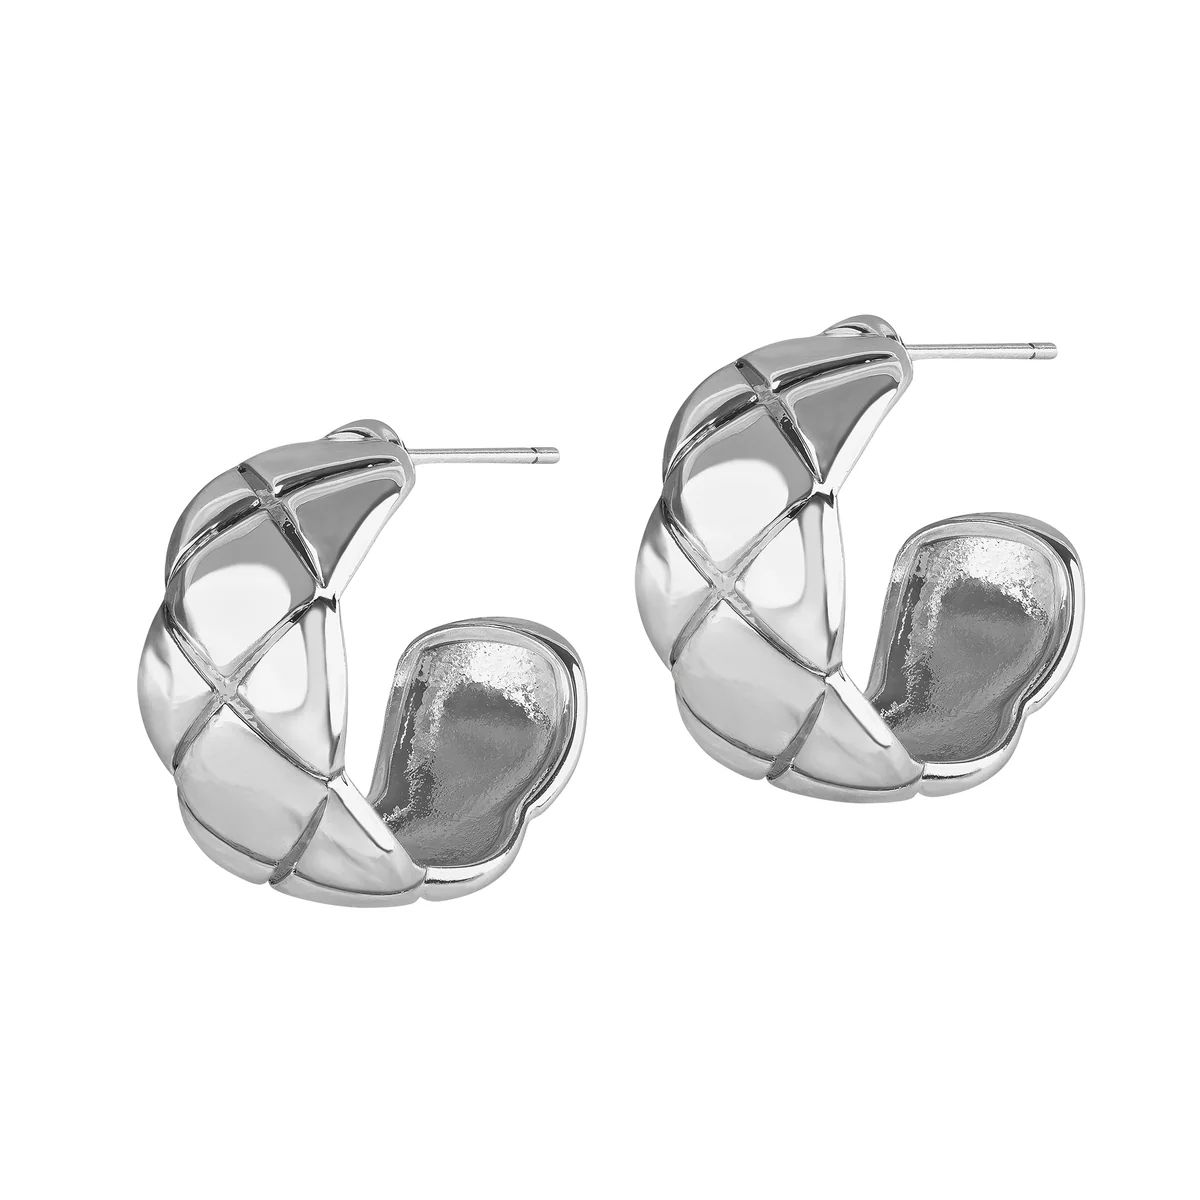 Coco Silver Earrings | Electric Picks Jewelry